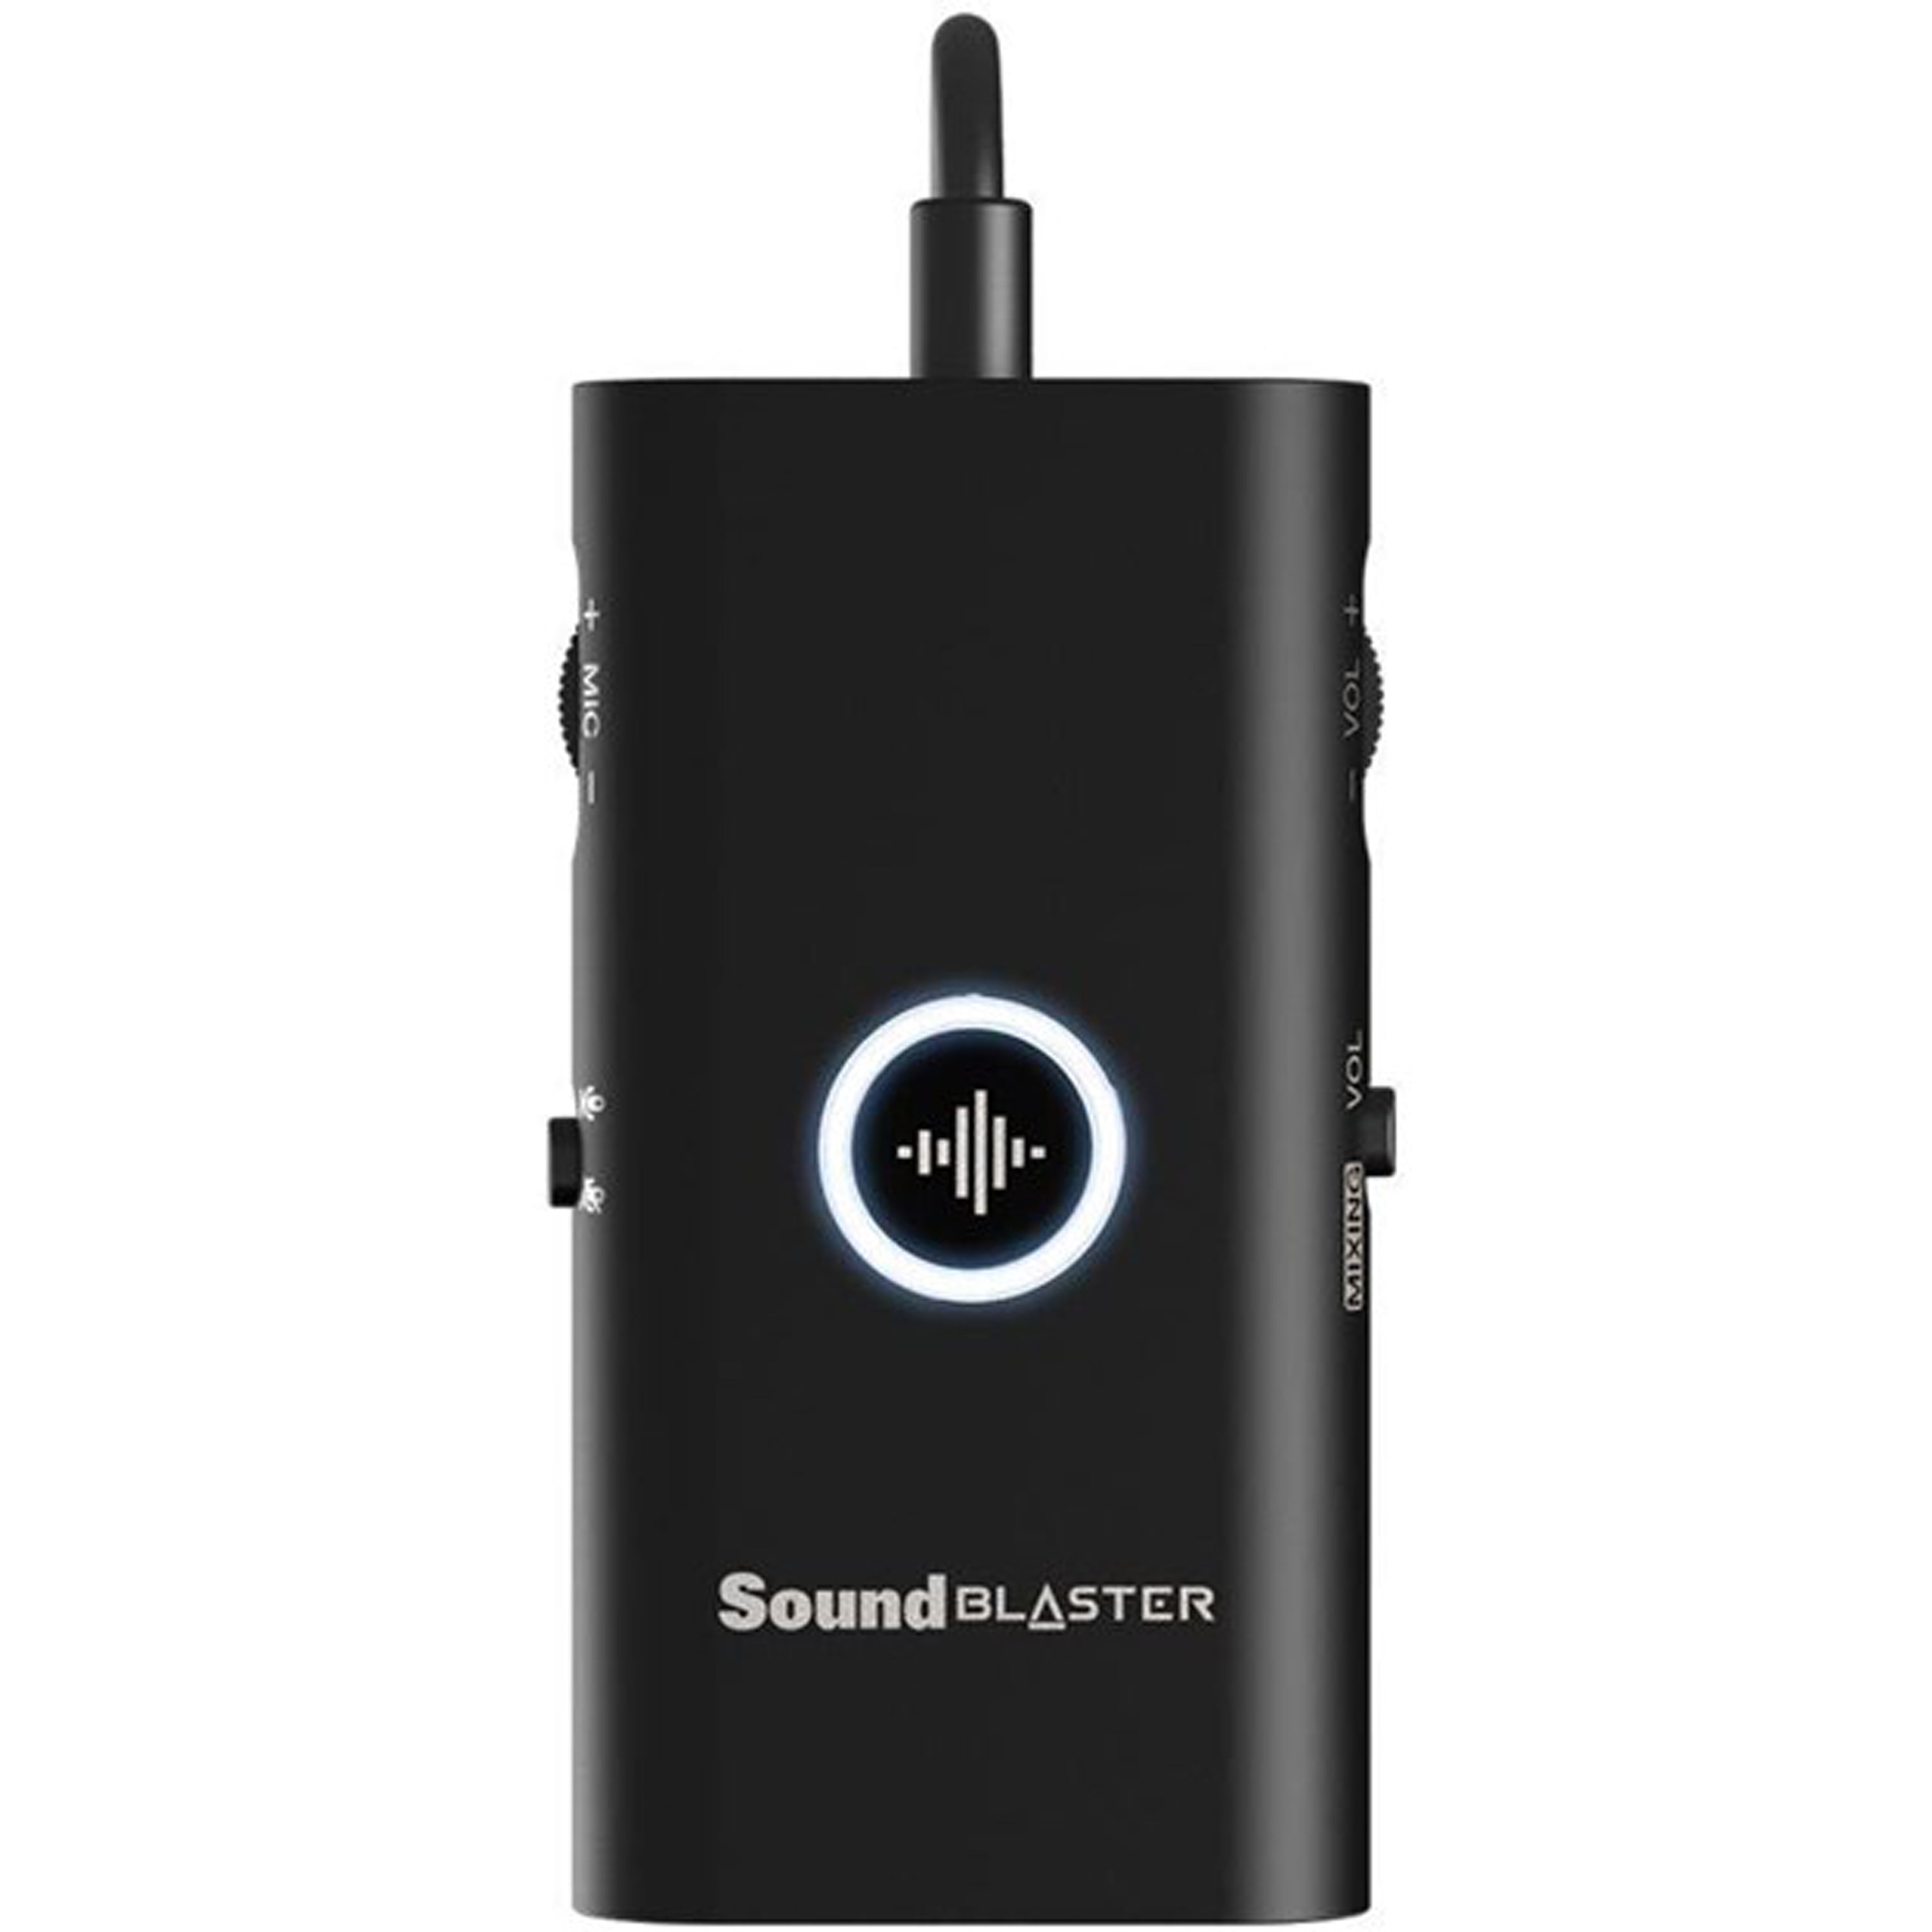 Creative Labs Sb Sound Blaster G3 Portable Gaming Usb Dac Amp Walmart Com Walmart Com